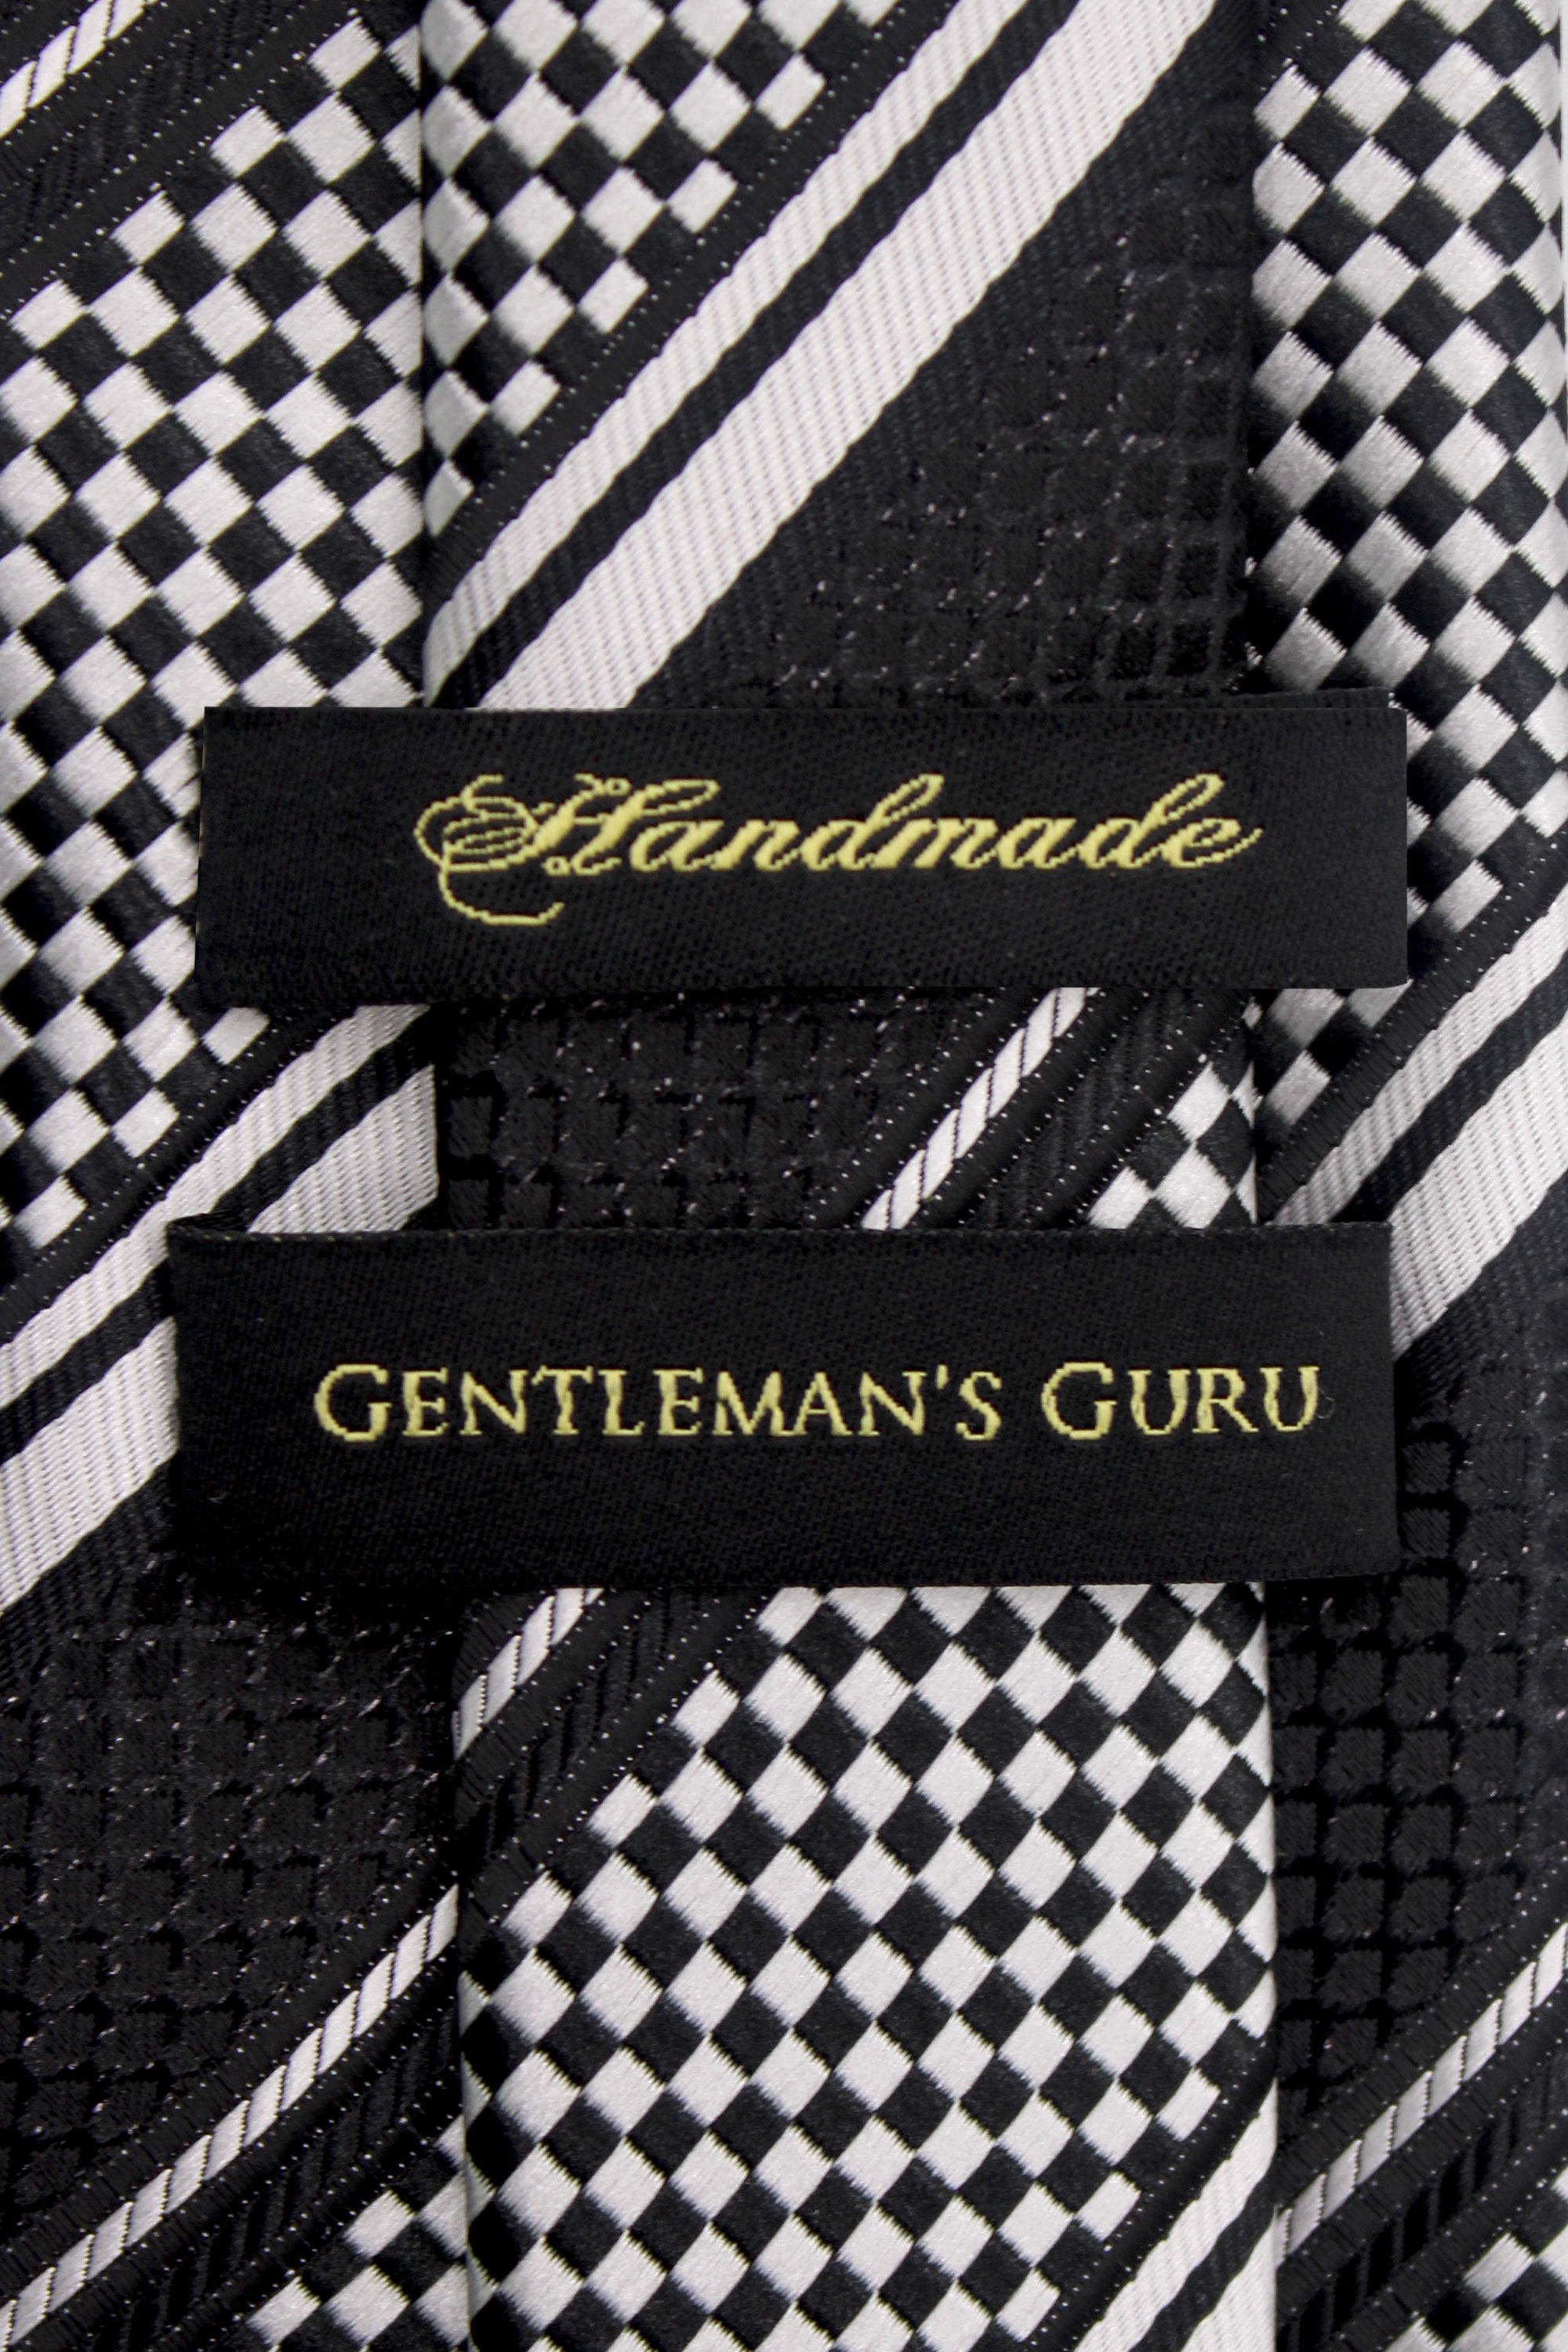 Black-and-White-Striped-Branded-Tie-from-Gentlemansguru.com